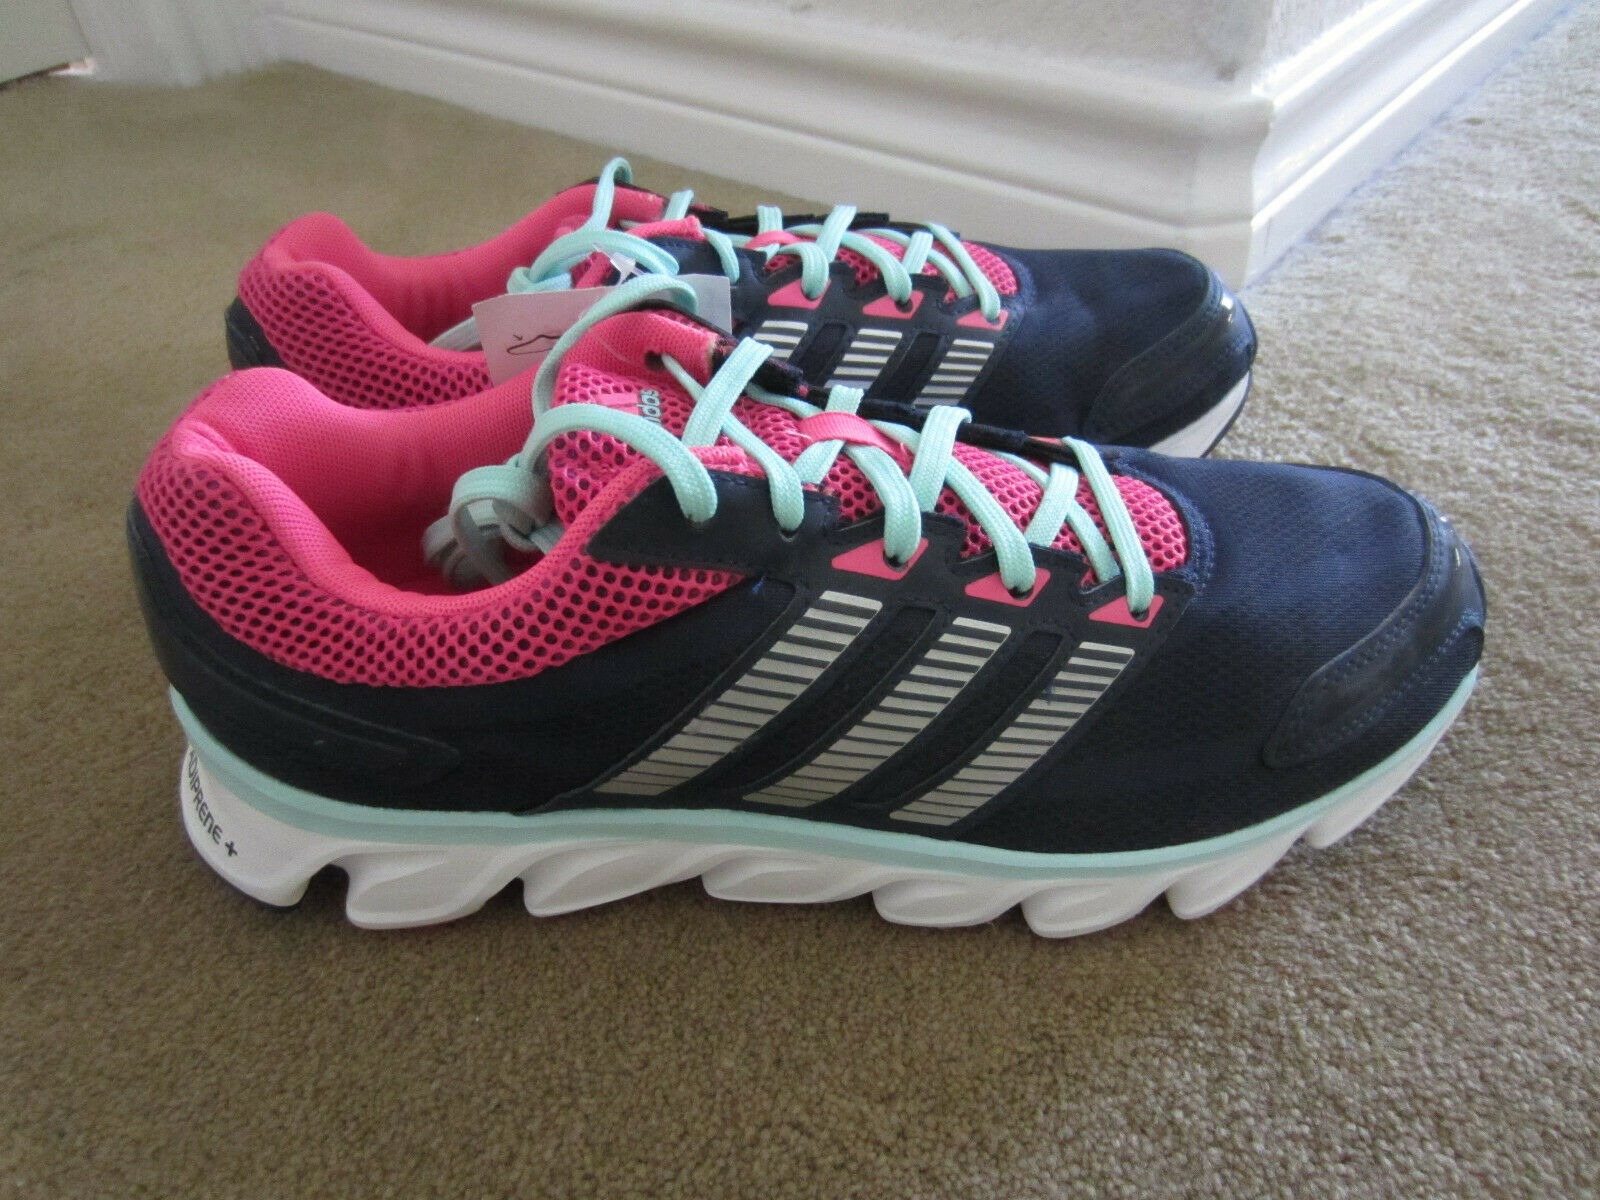 New Adidas C76995 Women's Powerblaze Running Shoes Navy Hot Pink White Size 10